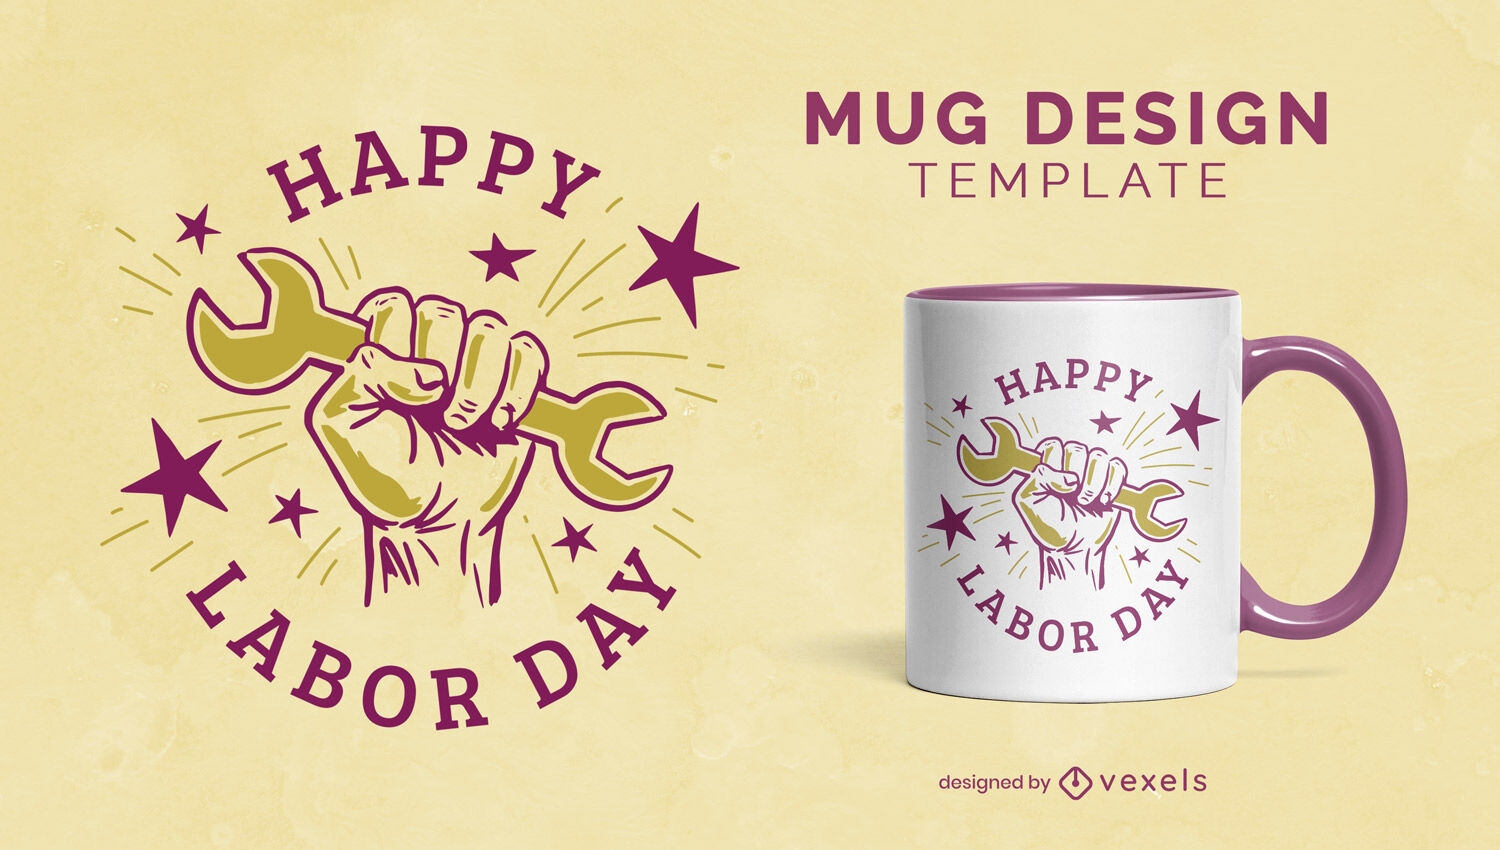 Happy labor day mug design